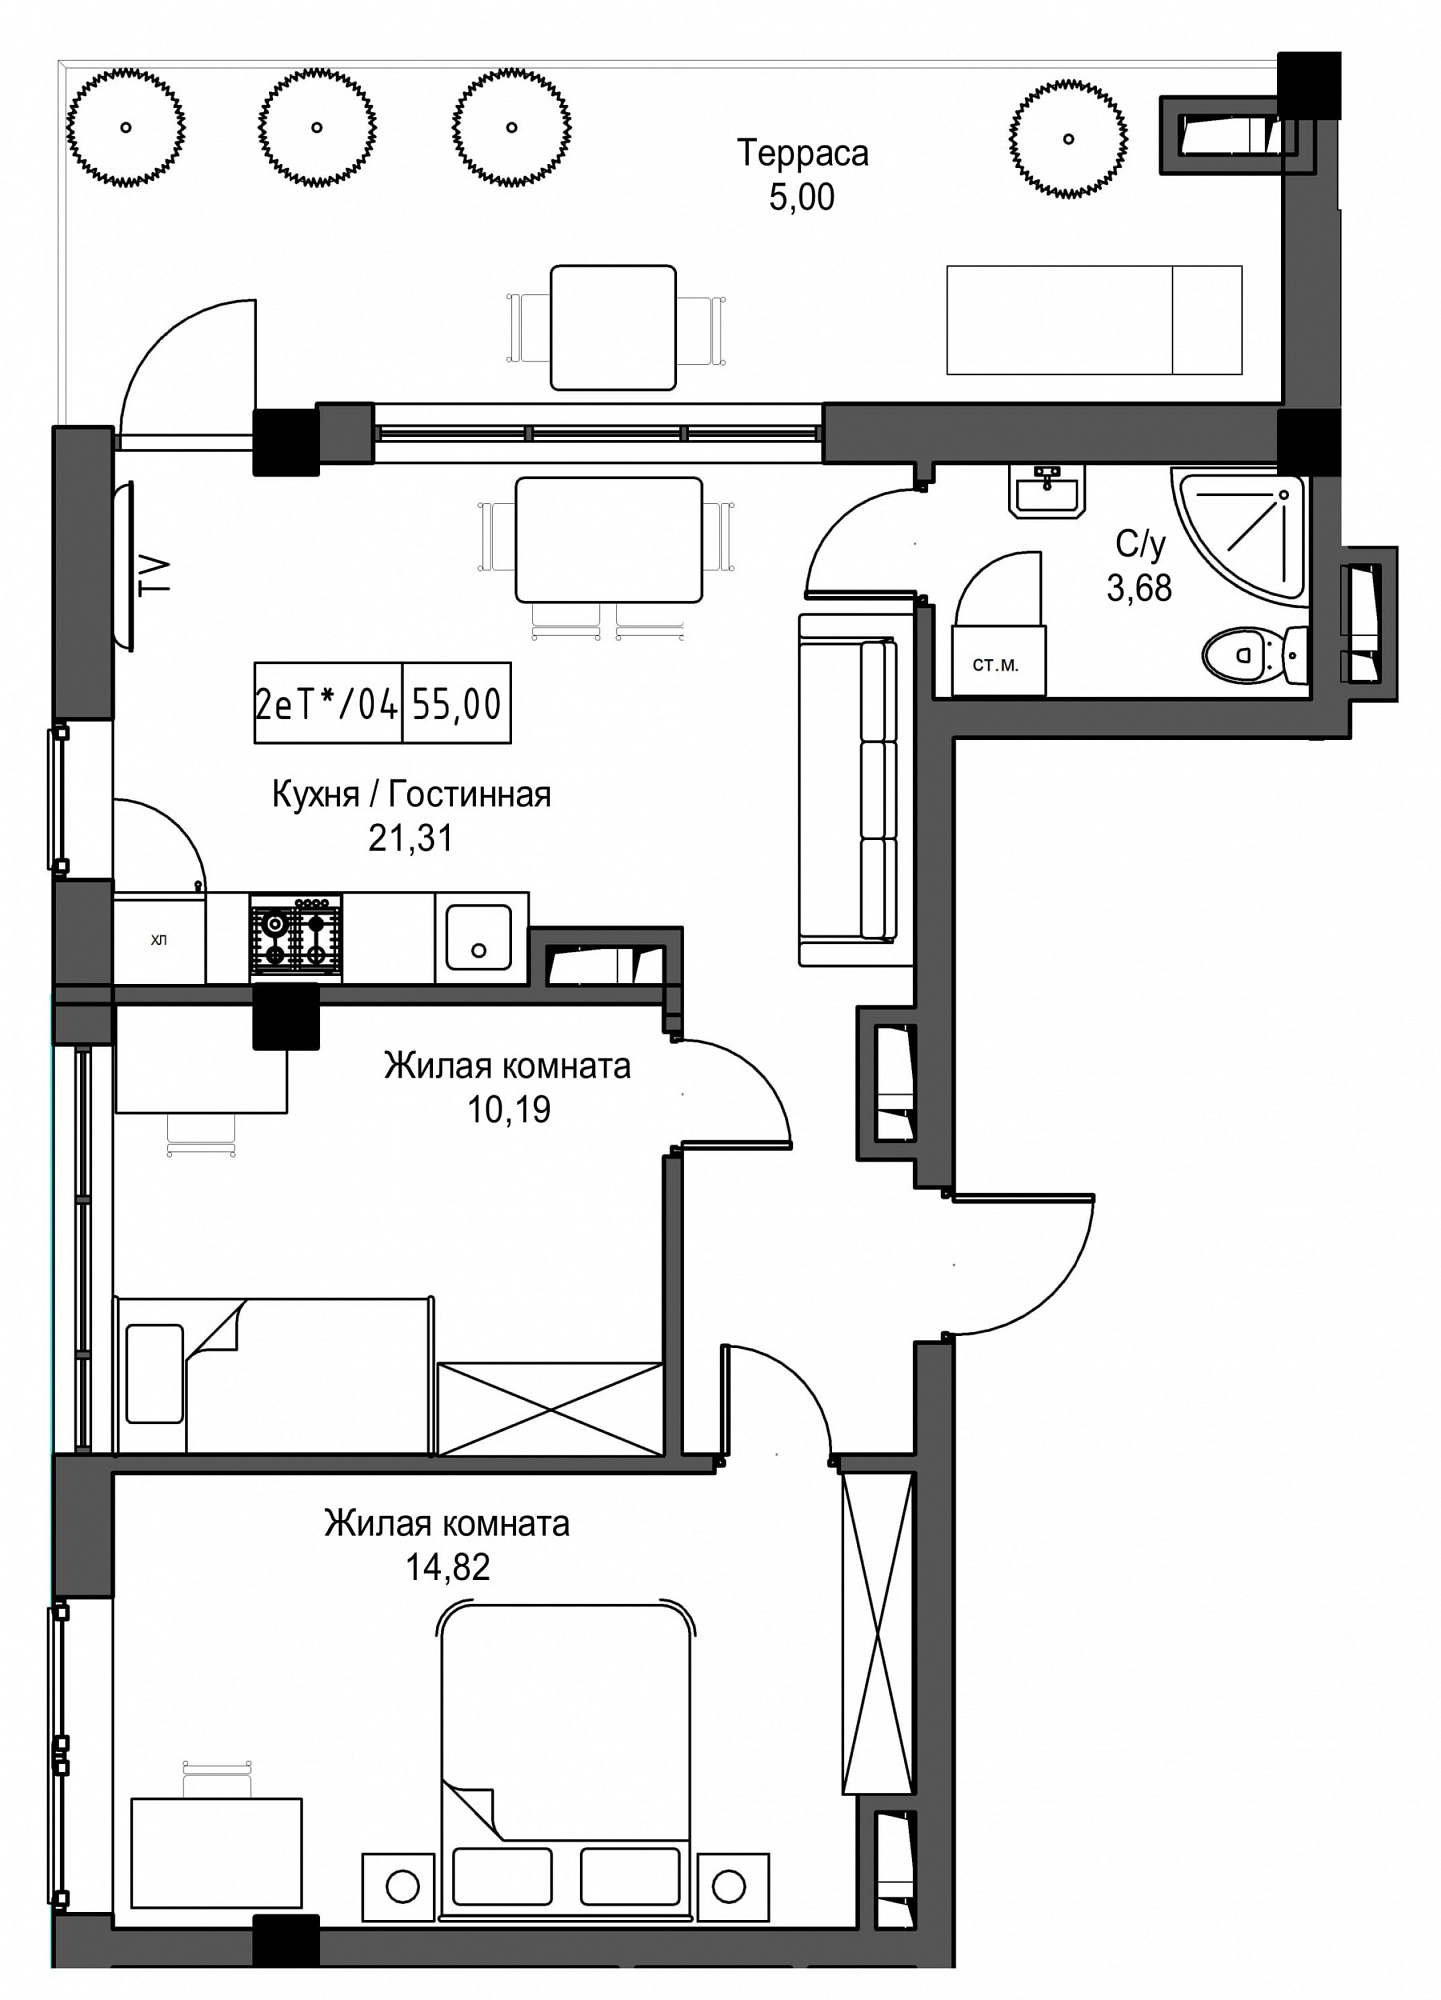 Планування 2-к квартира площею 55м2, UM-002-07/0070.